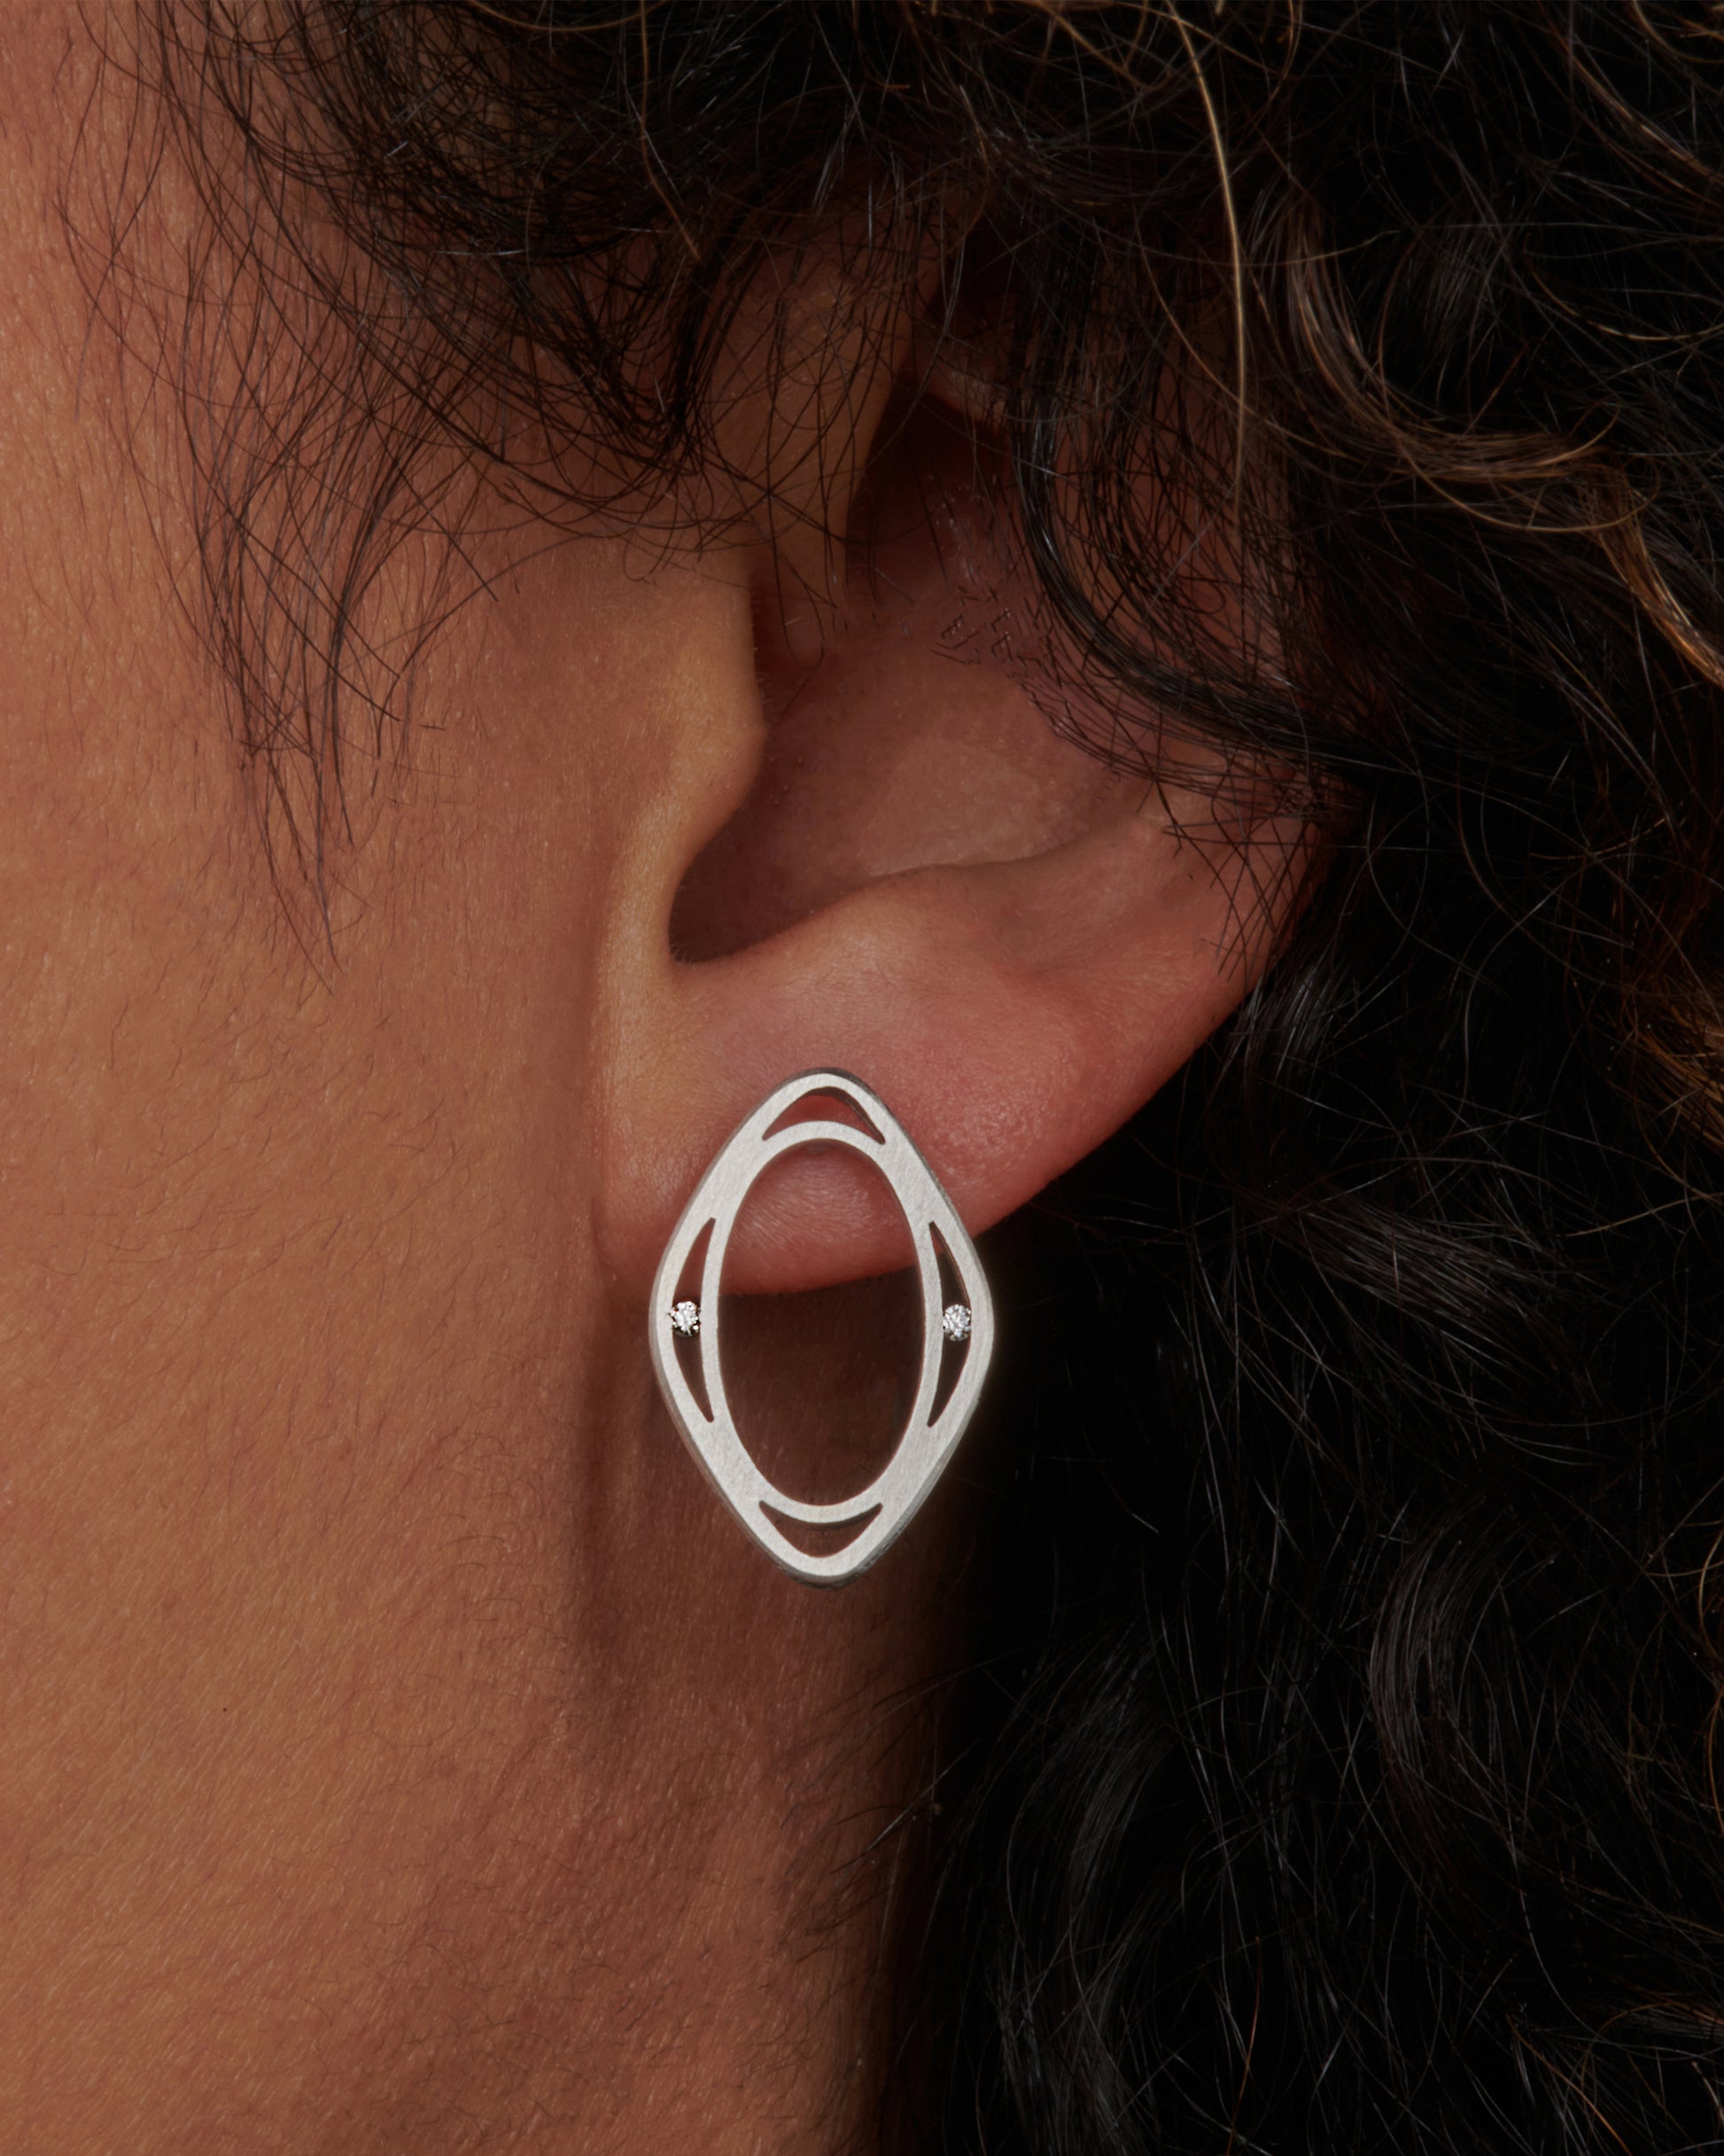 A pair of vintage 18k white gold diamond-shaped window stud earrings shown being worn.